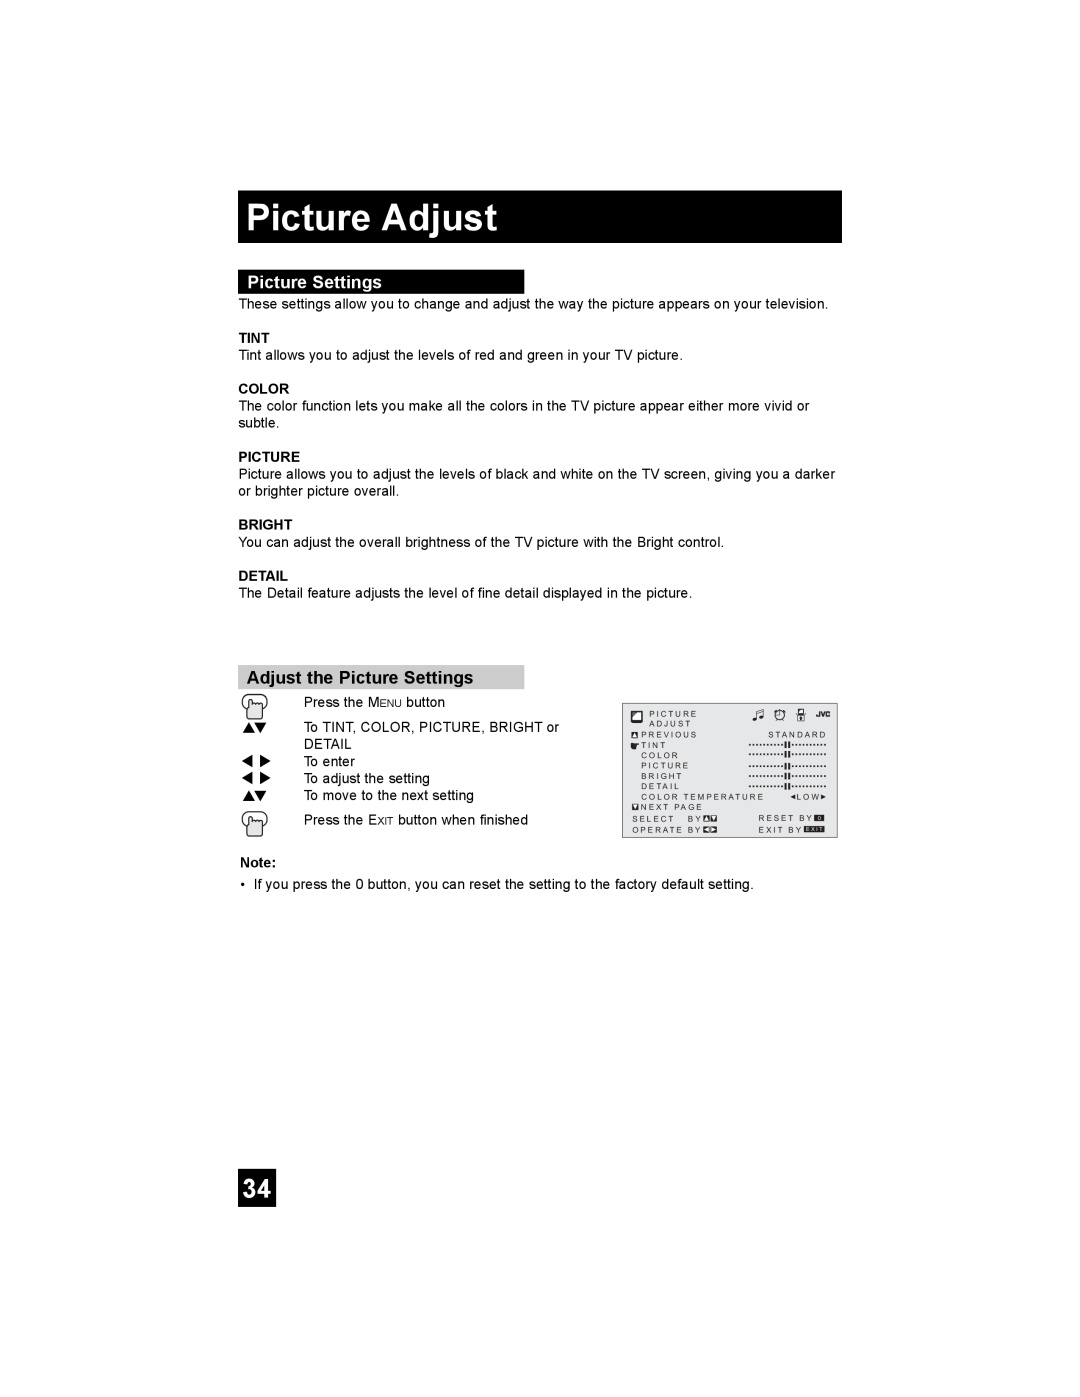 JVC AV 20FA44 manual Picture Adjust, Adjust the Picture Settings 